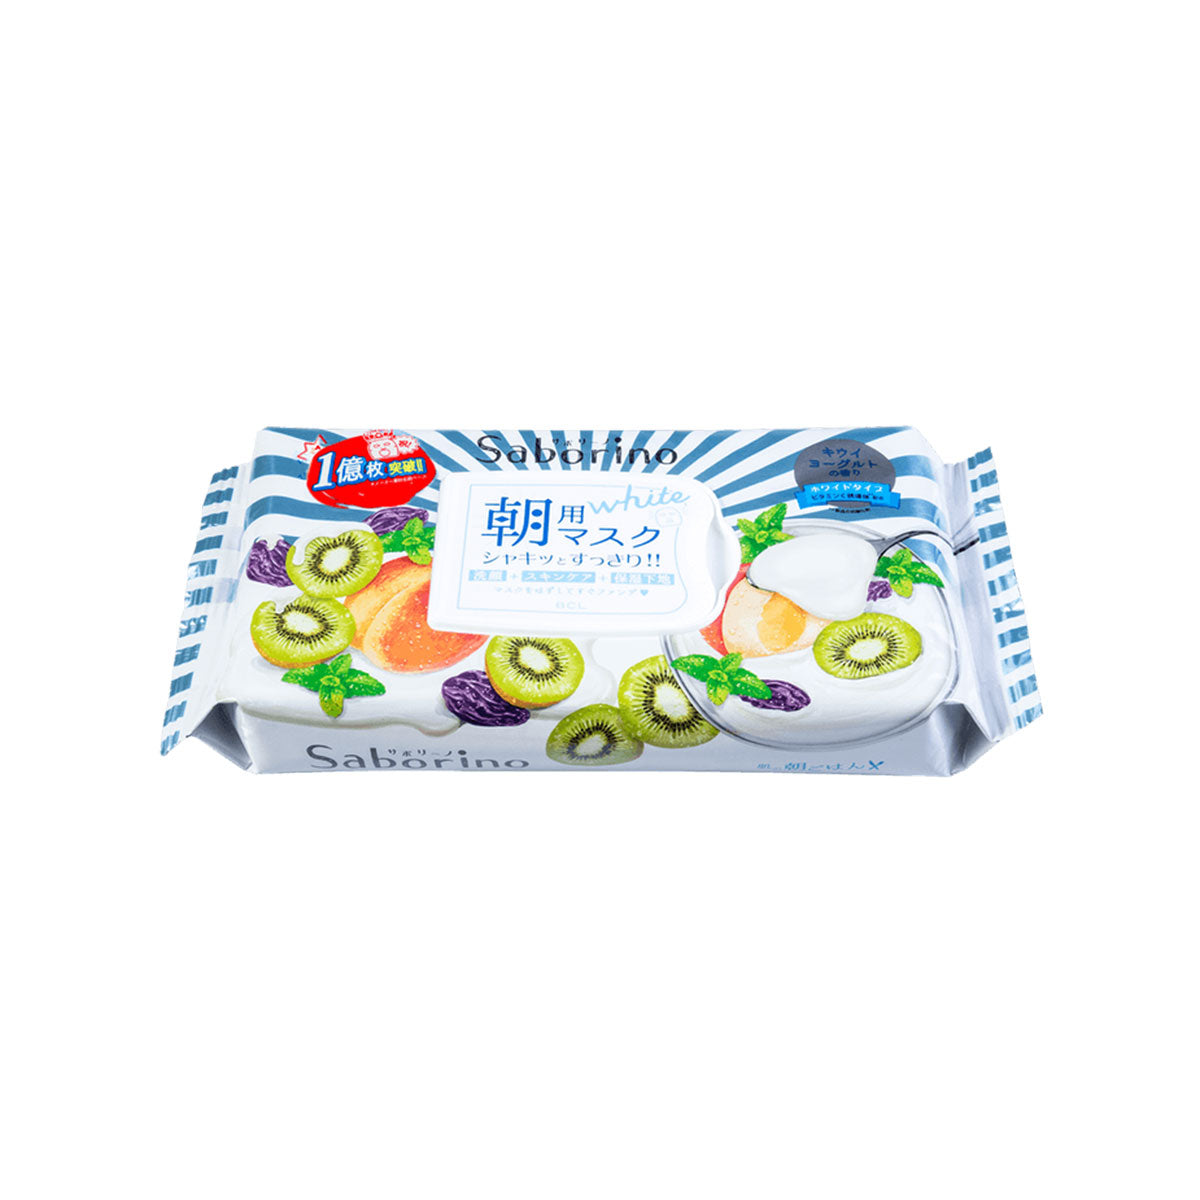 Whitening Morning Mask #Kiwi Yogurt 28 Sheets